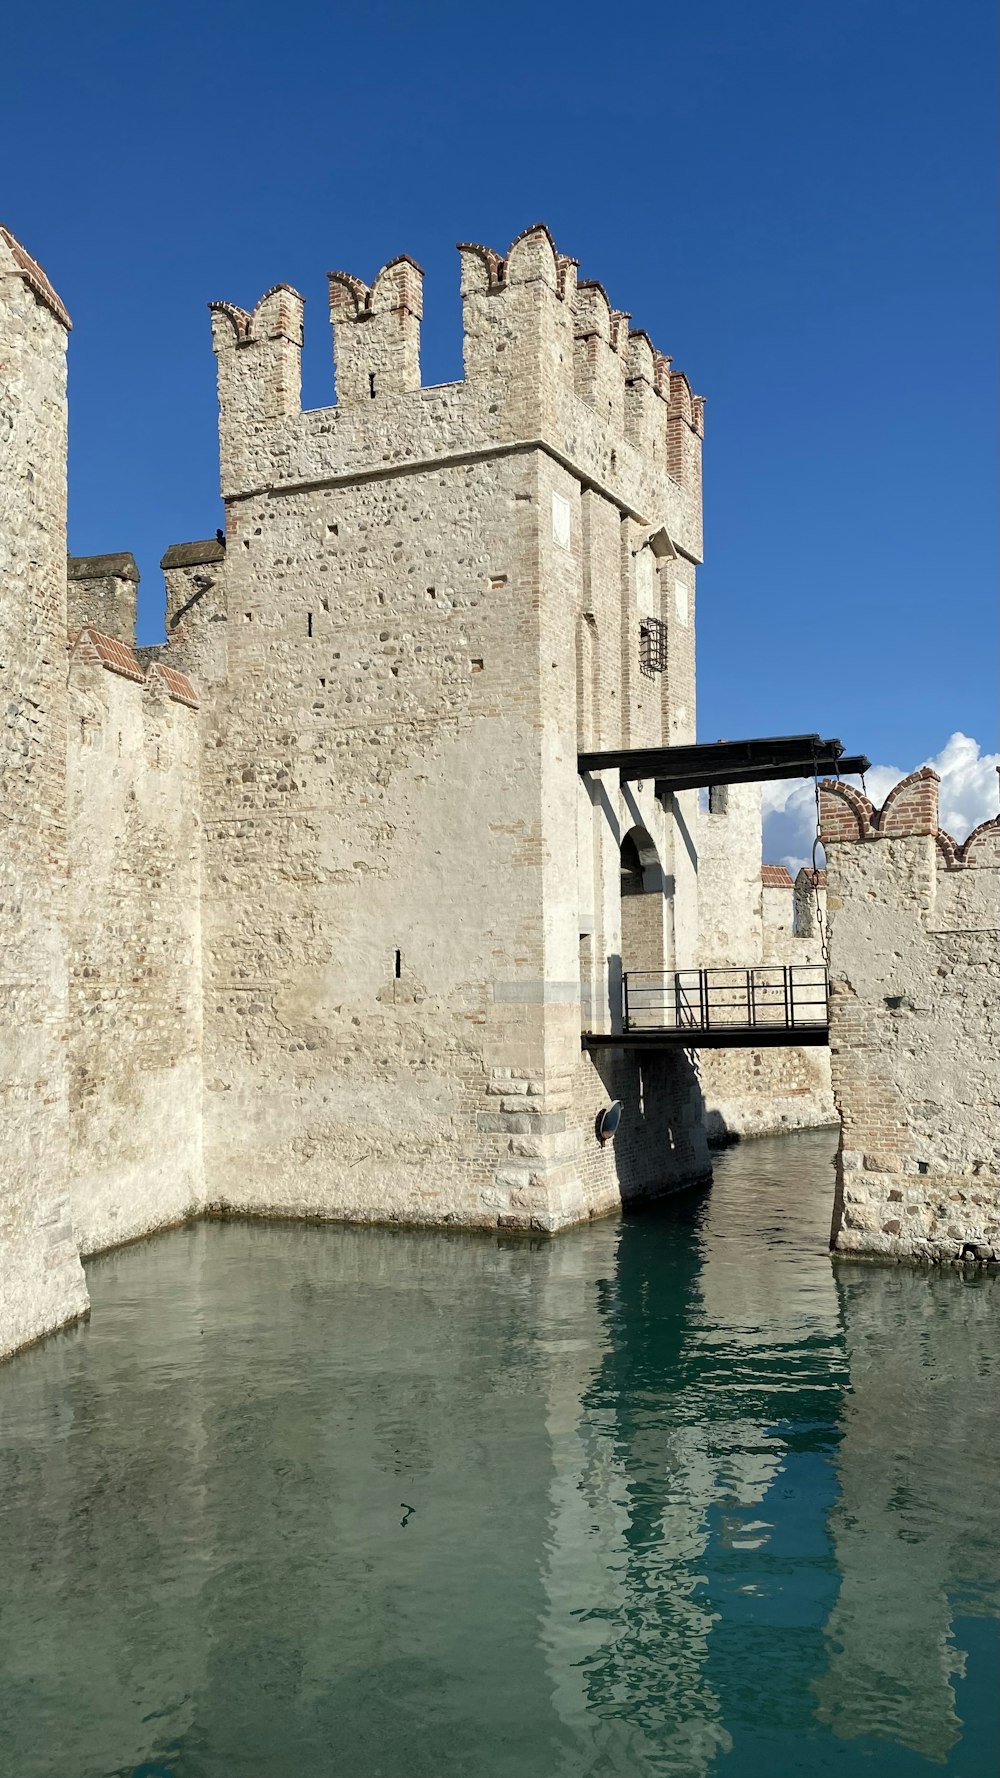 Un puente sobre un cuerpo de agua frente a un castillo